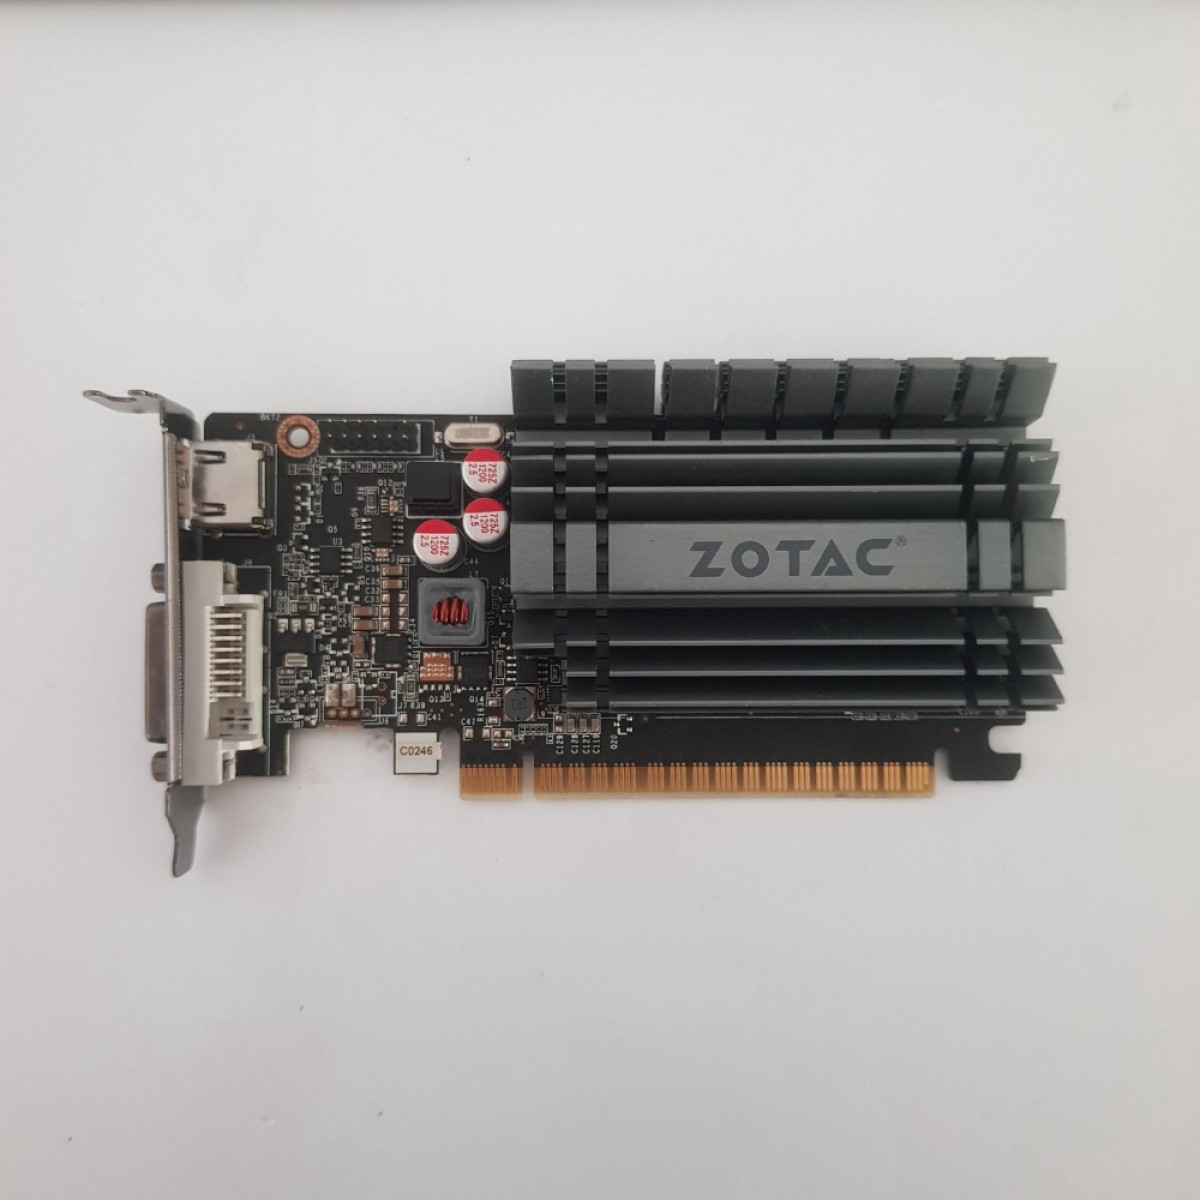 ZOTAC GeForce GT 730 GT730 4GB GDDR3 64 Bit T1